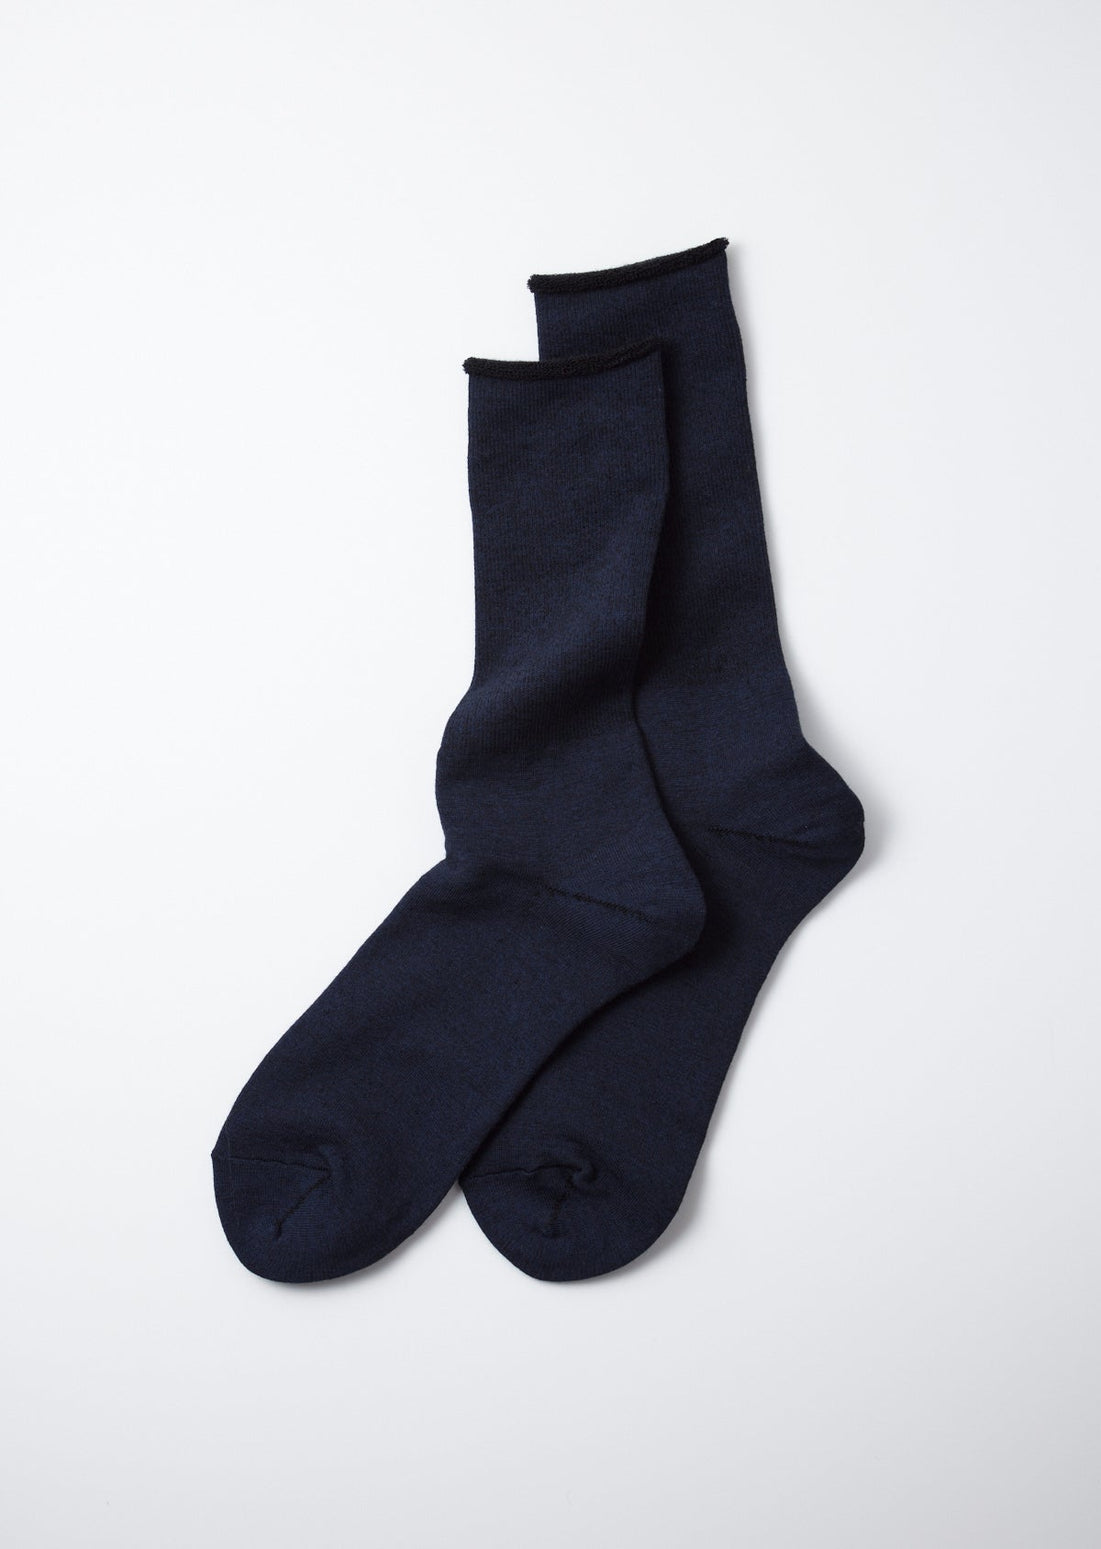 Navy/Black City Socks